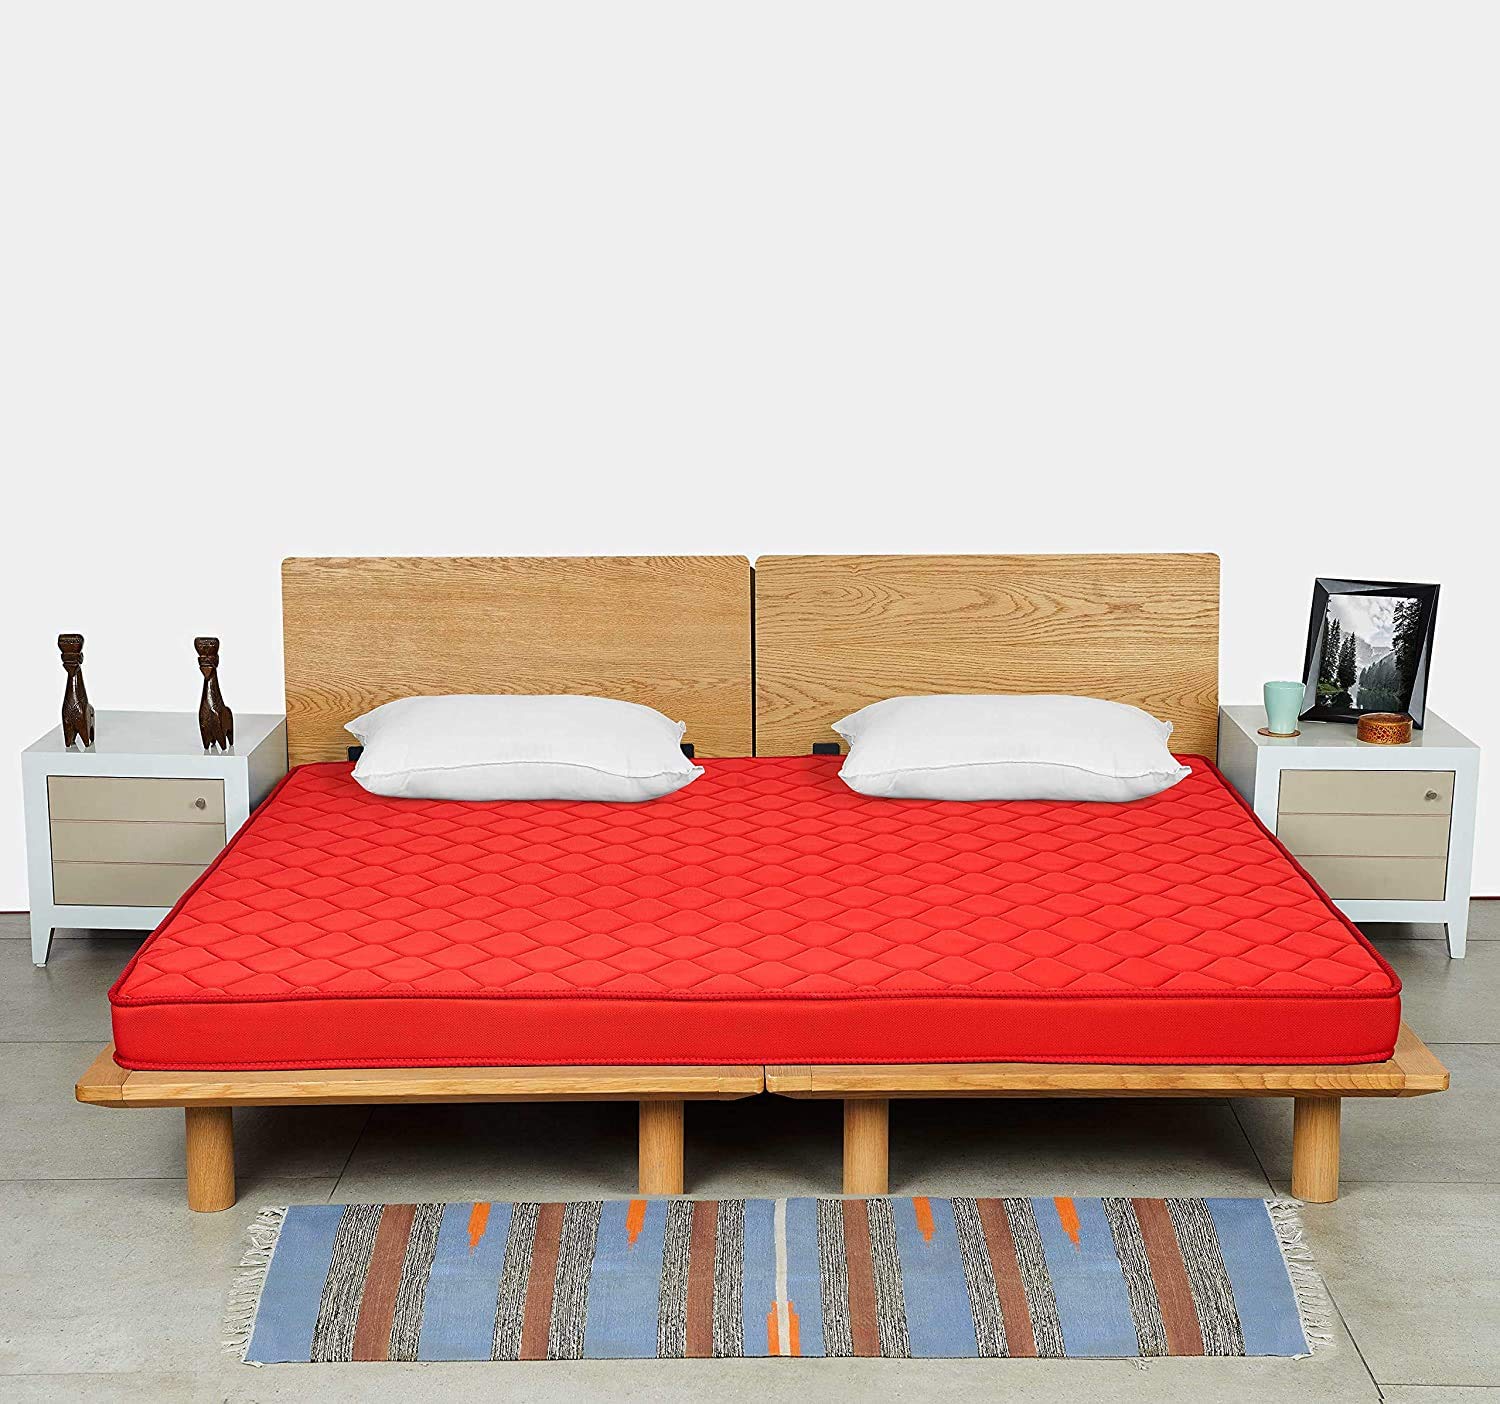 sleepwell-mattress-8-inch-price-in-india